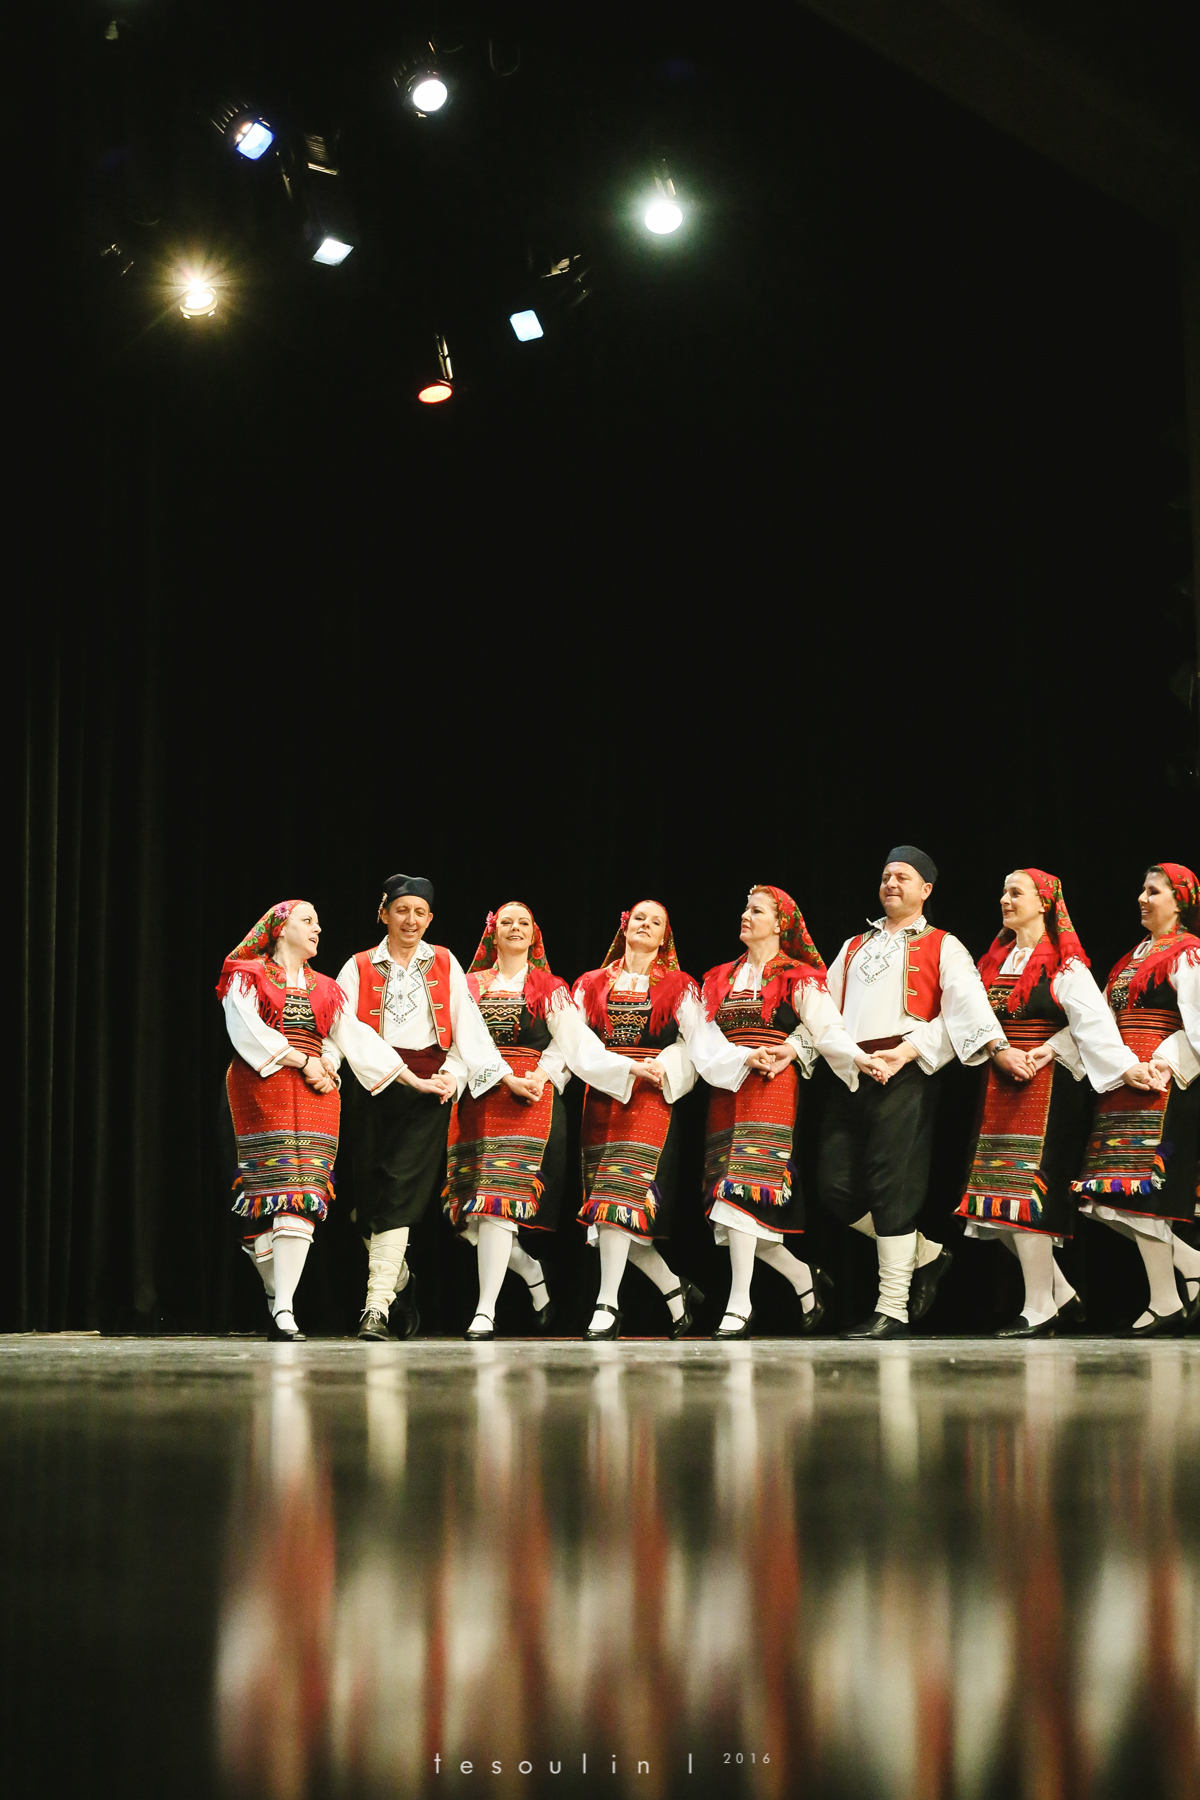 greek dances - tesoulin -7.jpg